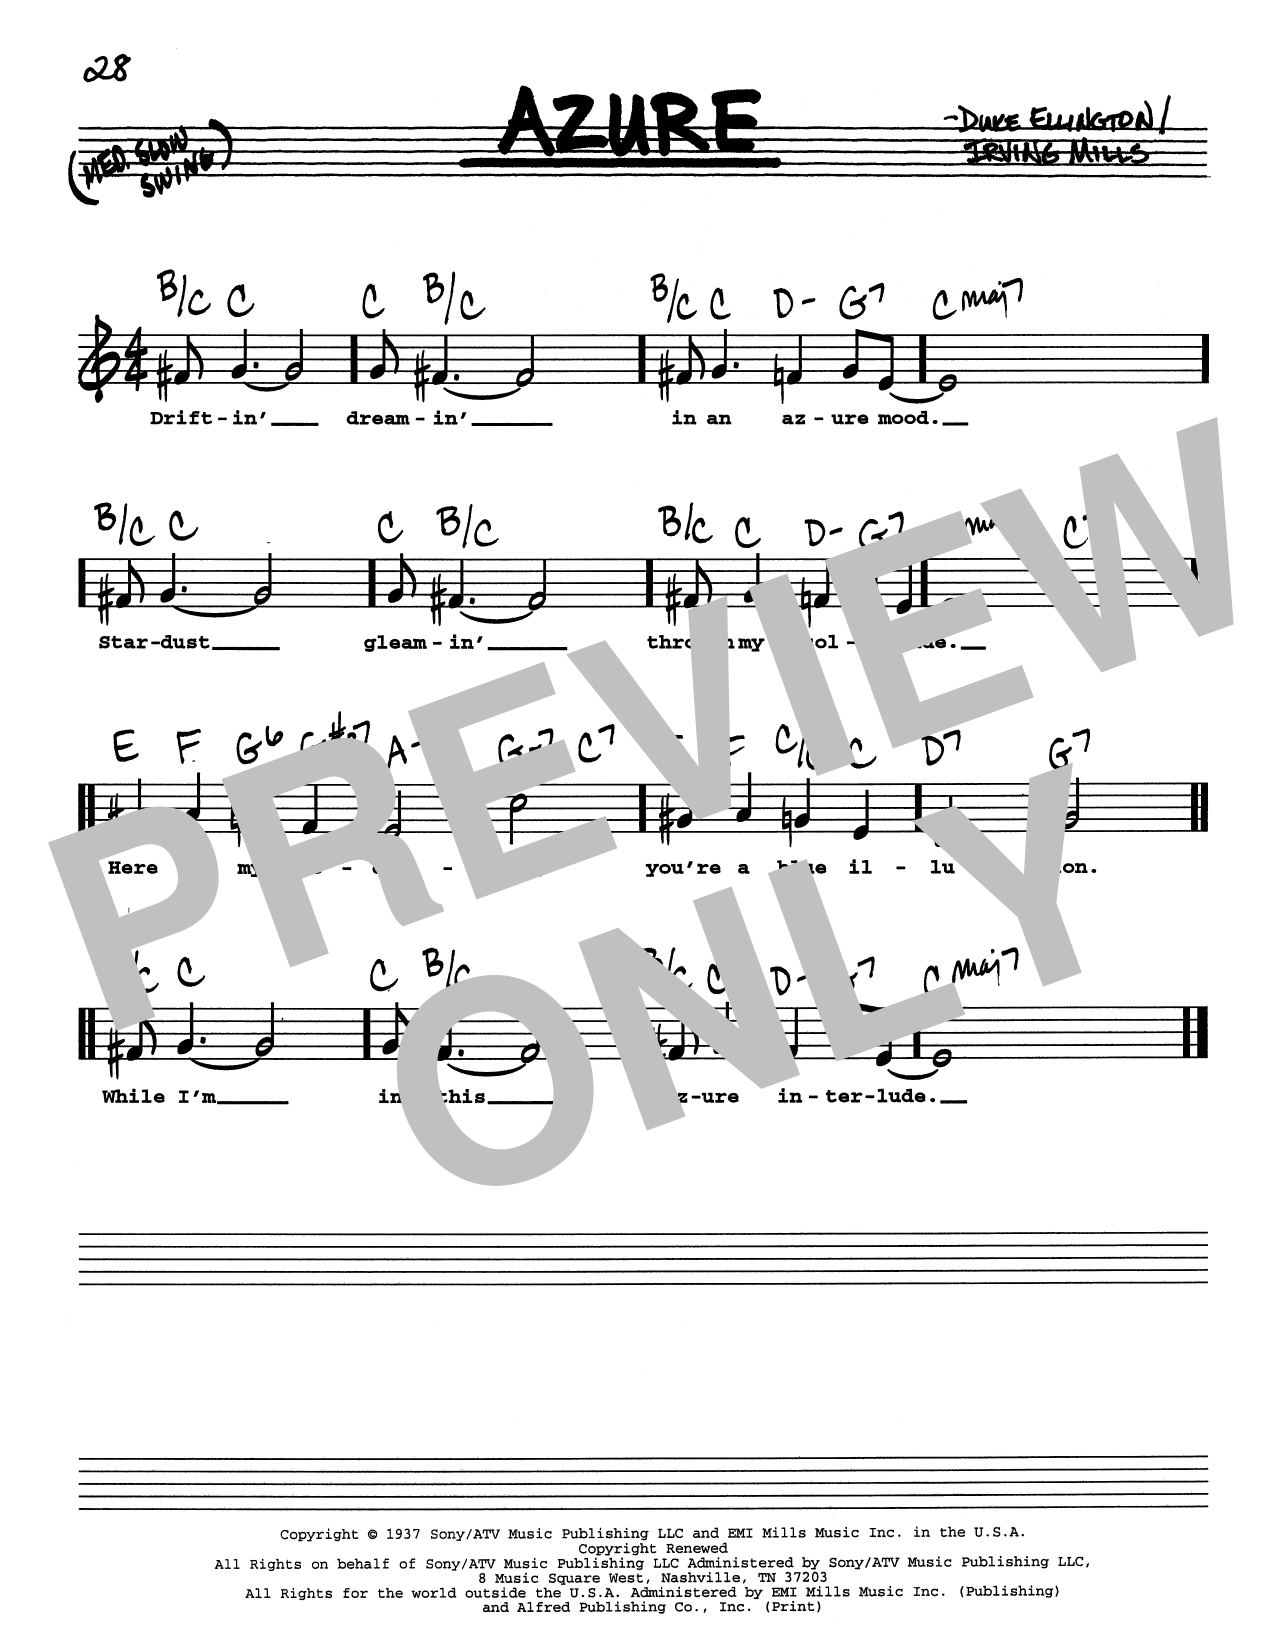 Duke Ellington Azure (Low Voice) Sheet Music Notes & Chords for Real Book – Melody, Lyrics & Chords - Download or Print PDF